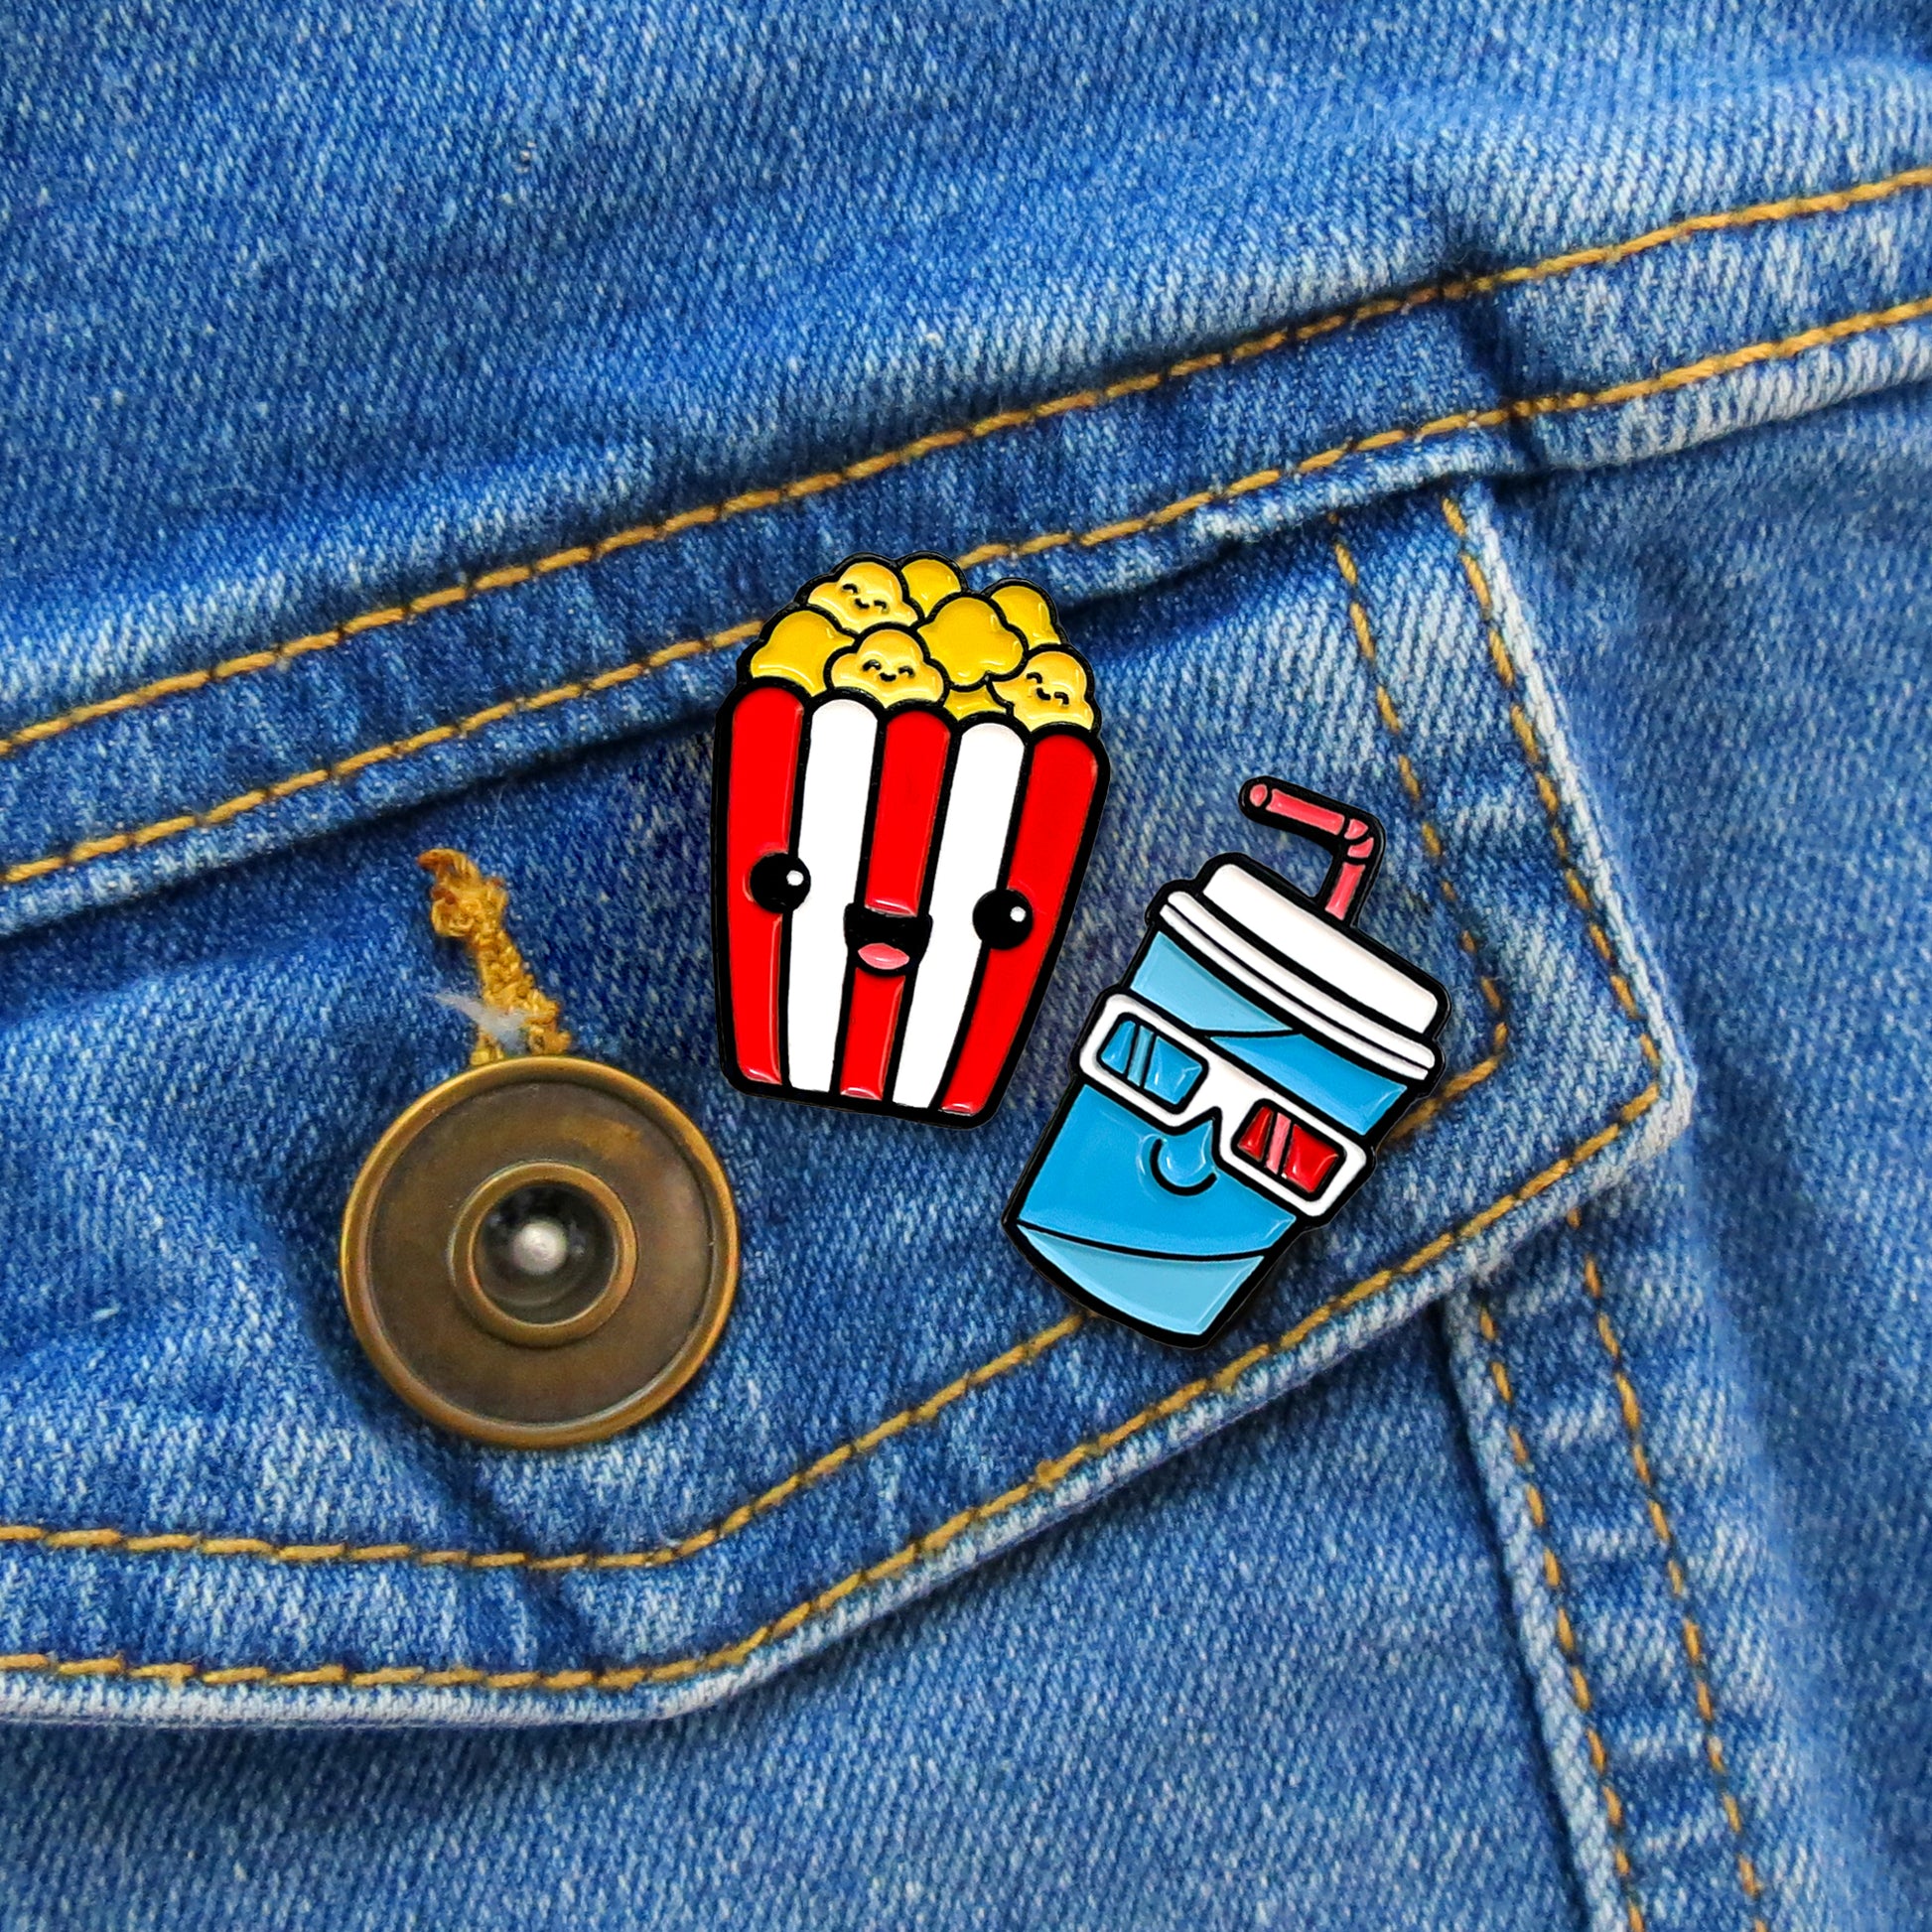 Popcorn and Soda enamel pins on jean jacket pocket